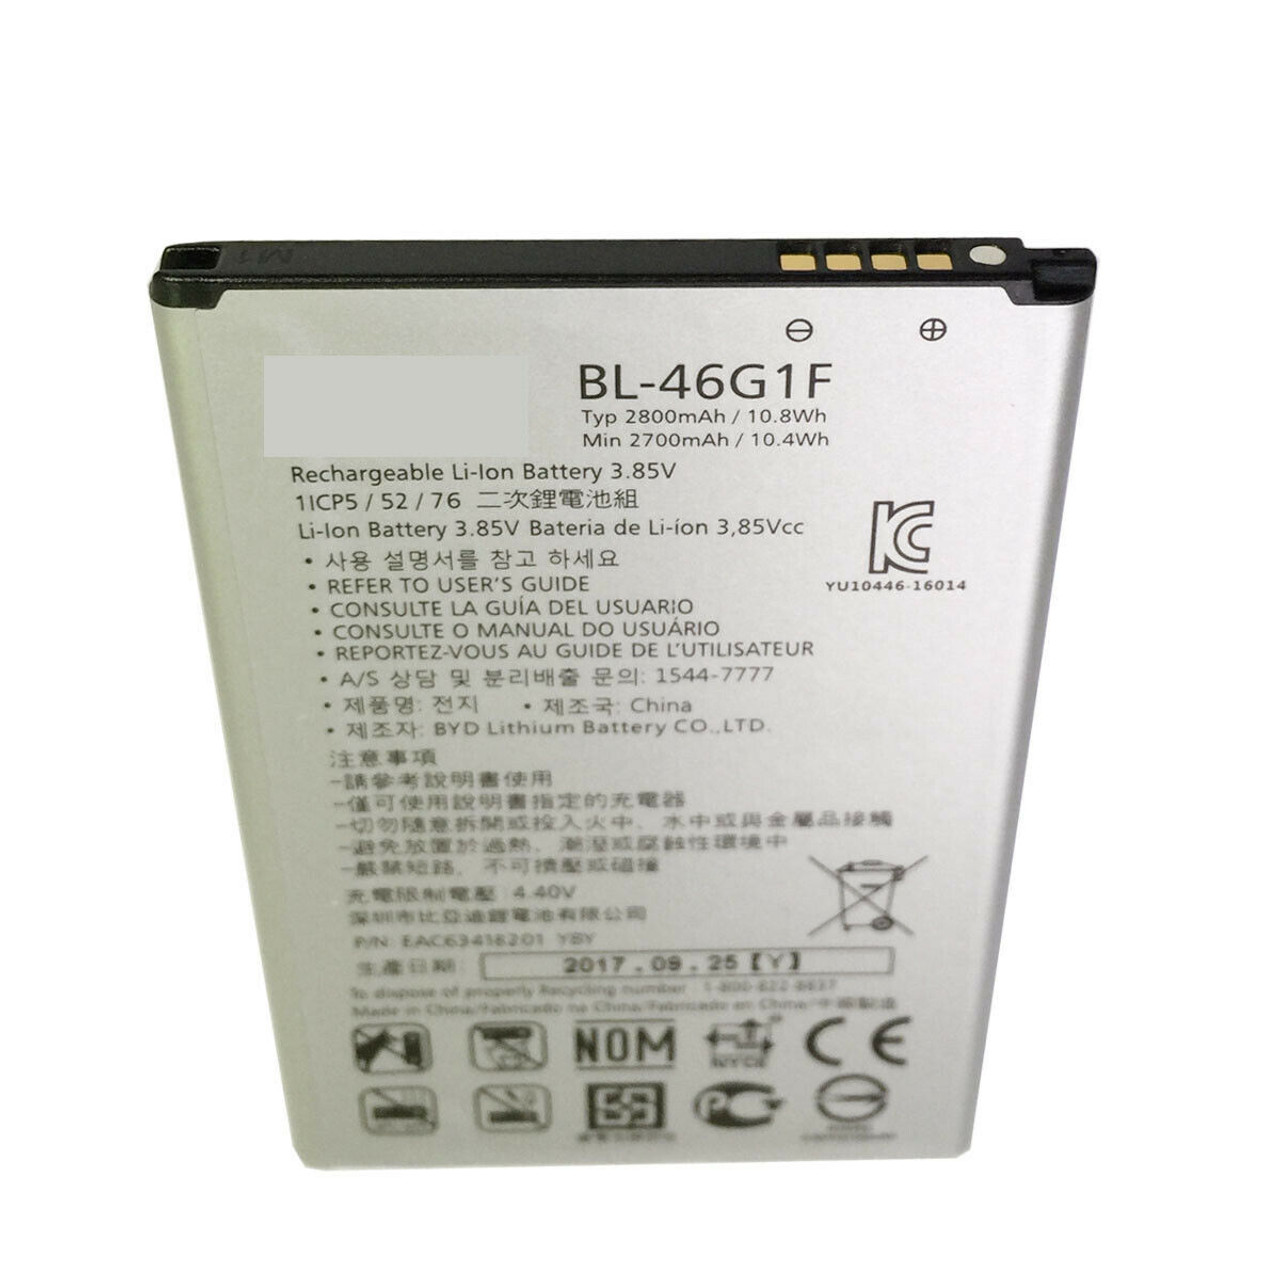 OEM SPEC BL-46G1F 2800 mAh Standard Battery For LG K20 Plus K425 K428 K430H USA!